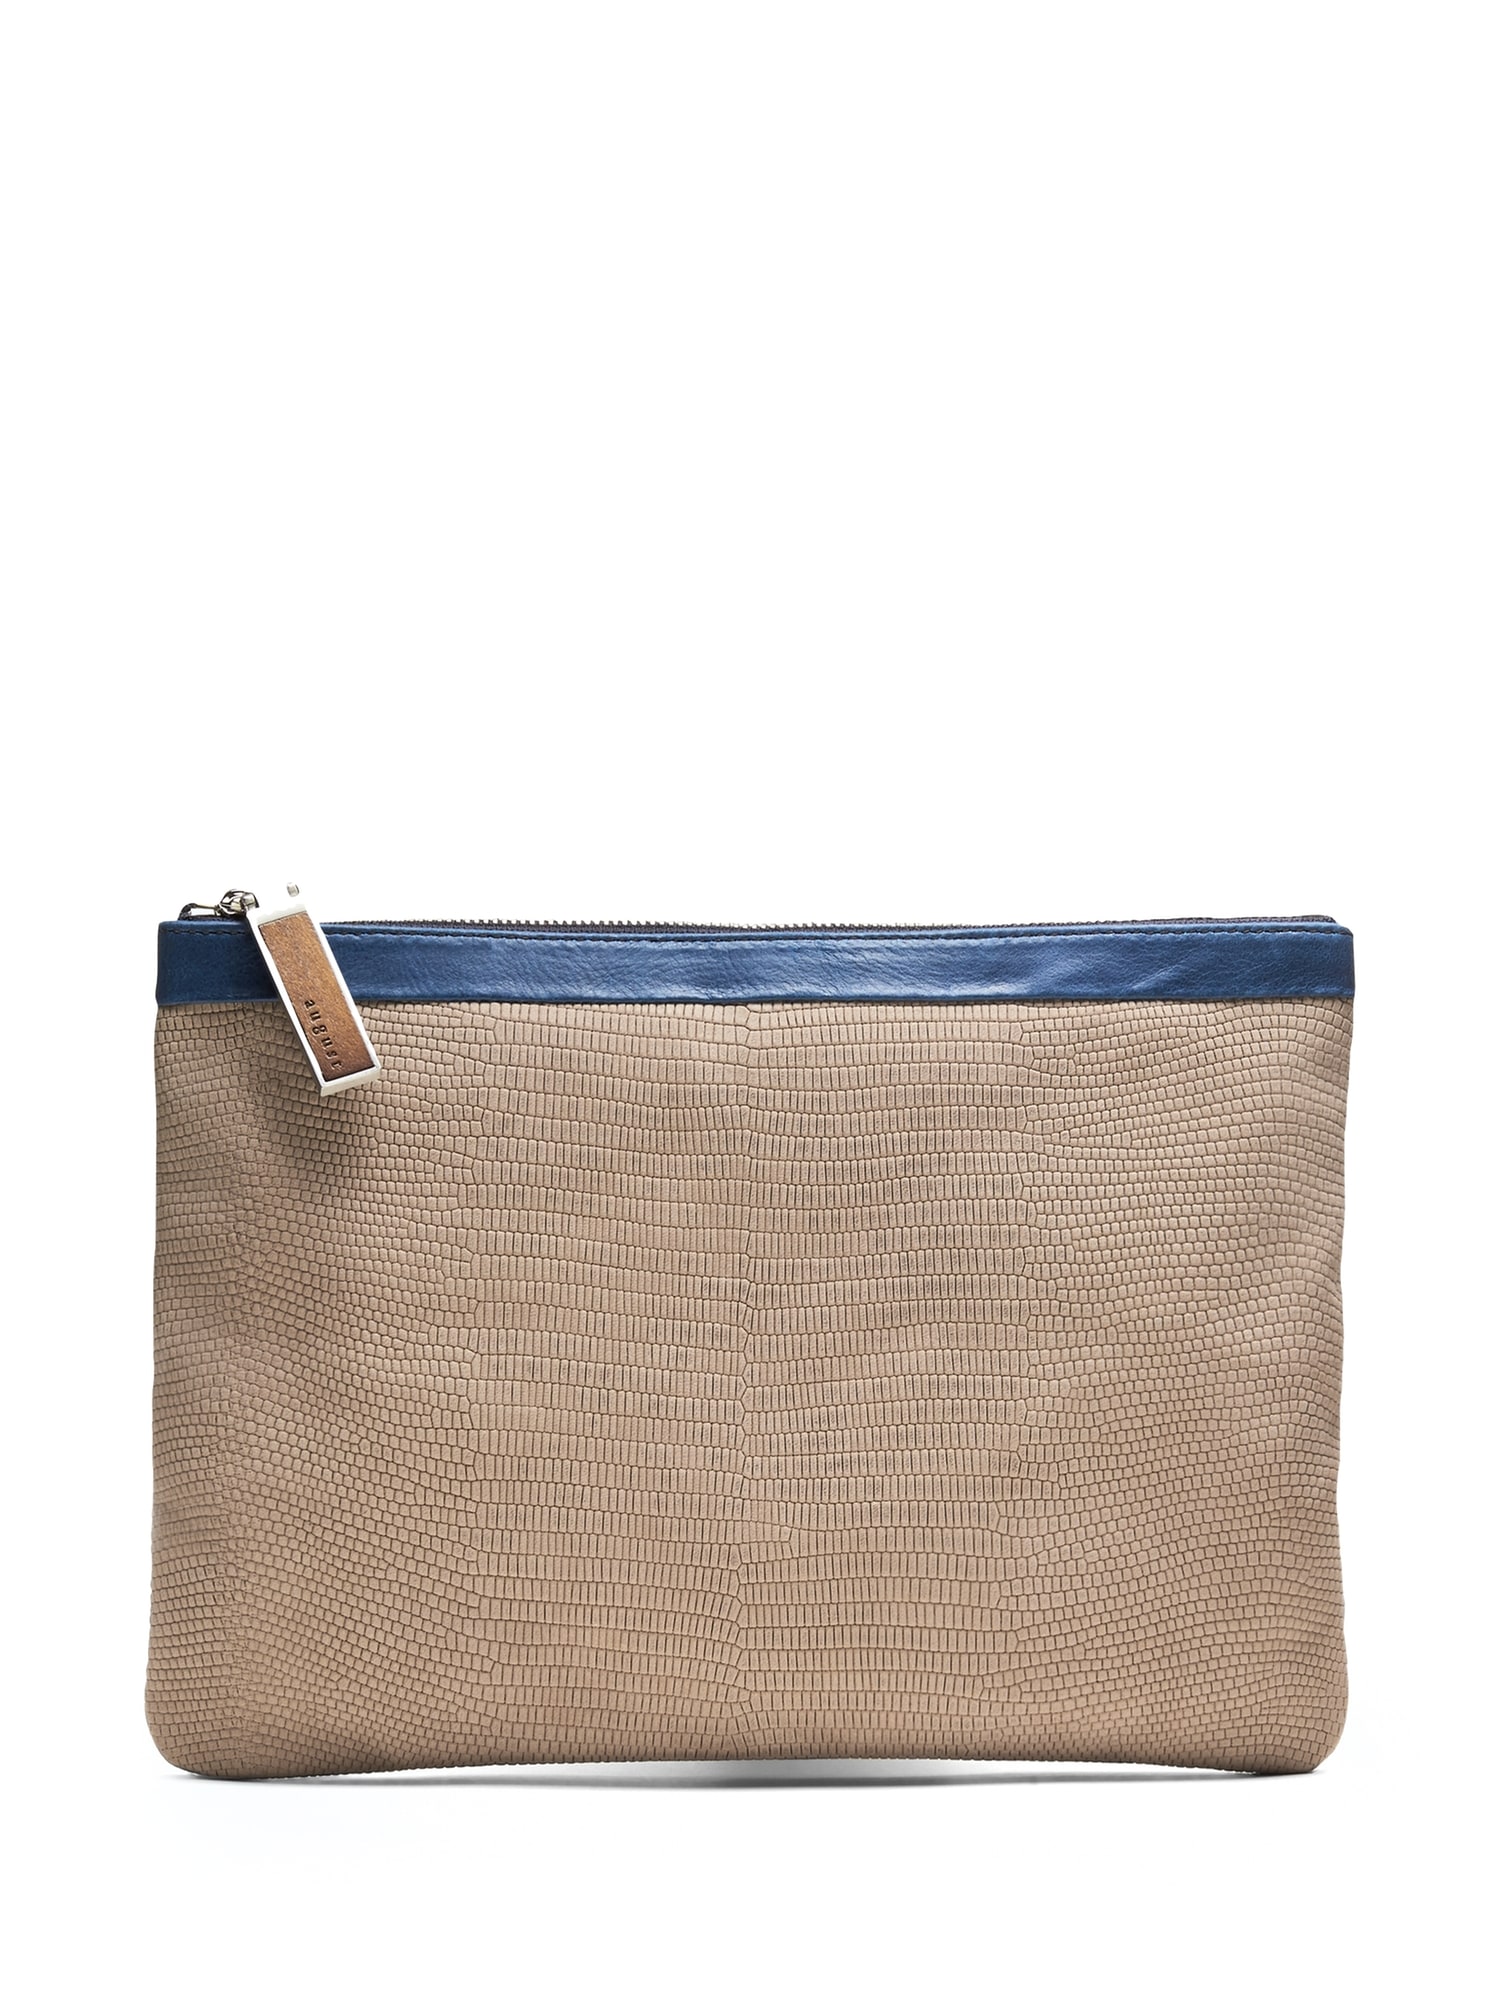 August Handbags &#124 Portofino Clutch